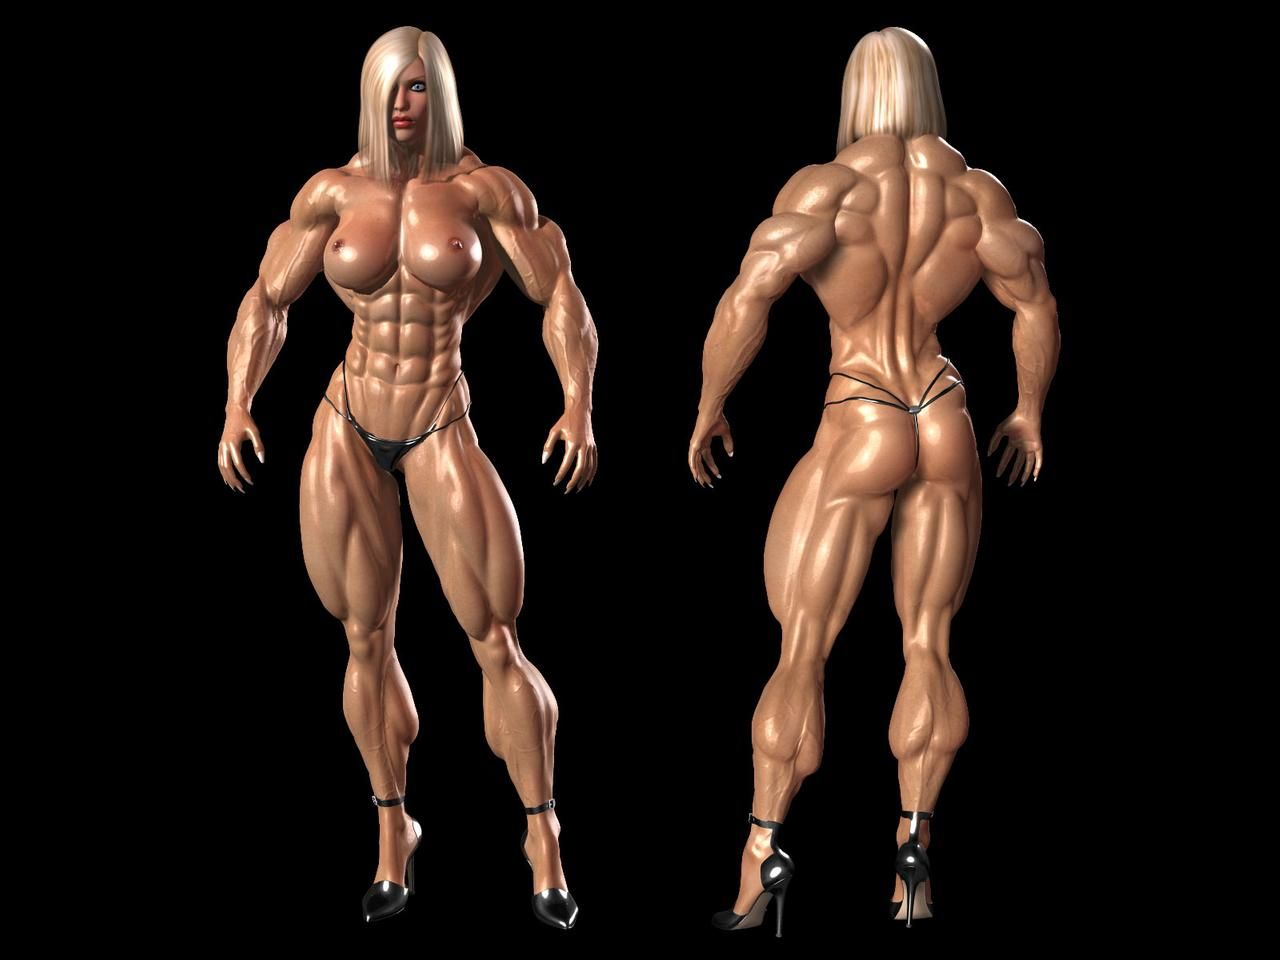 Muscle girls 3D models_ part 2 by Tigersan 124